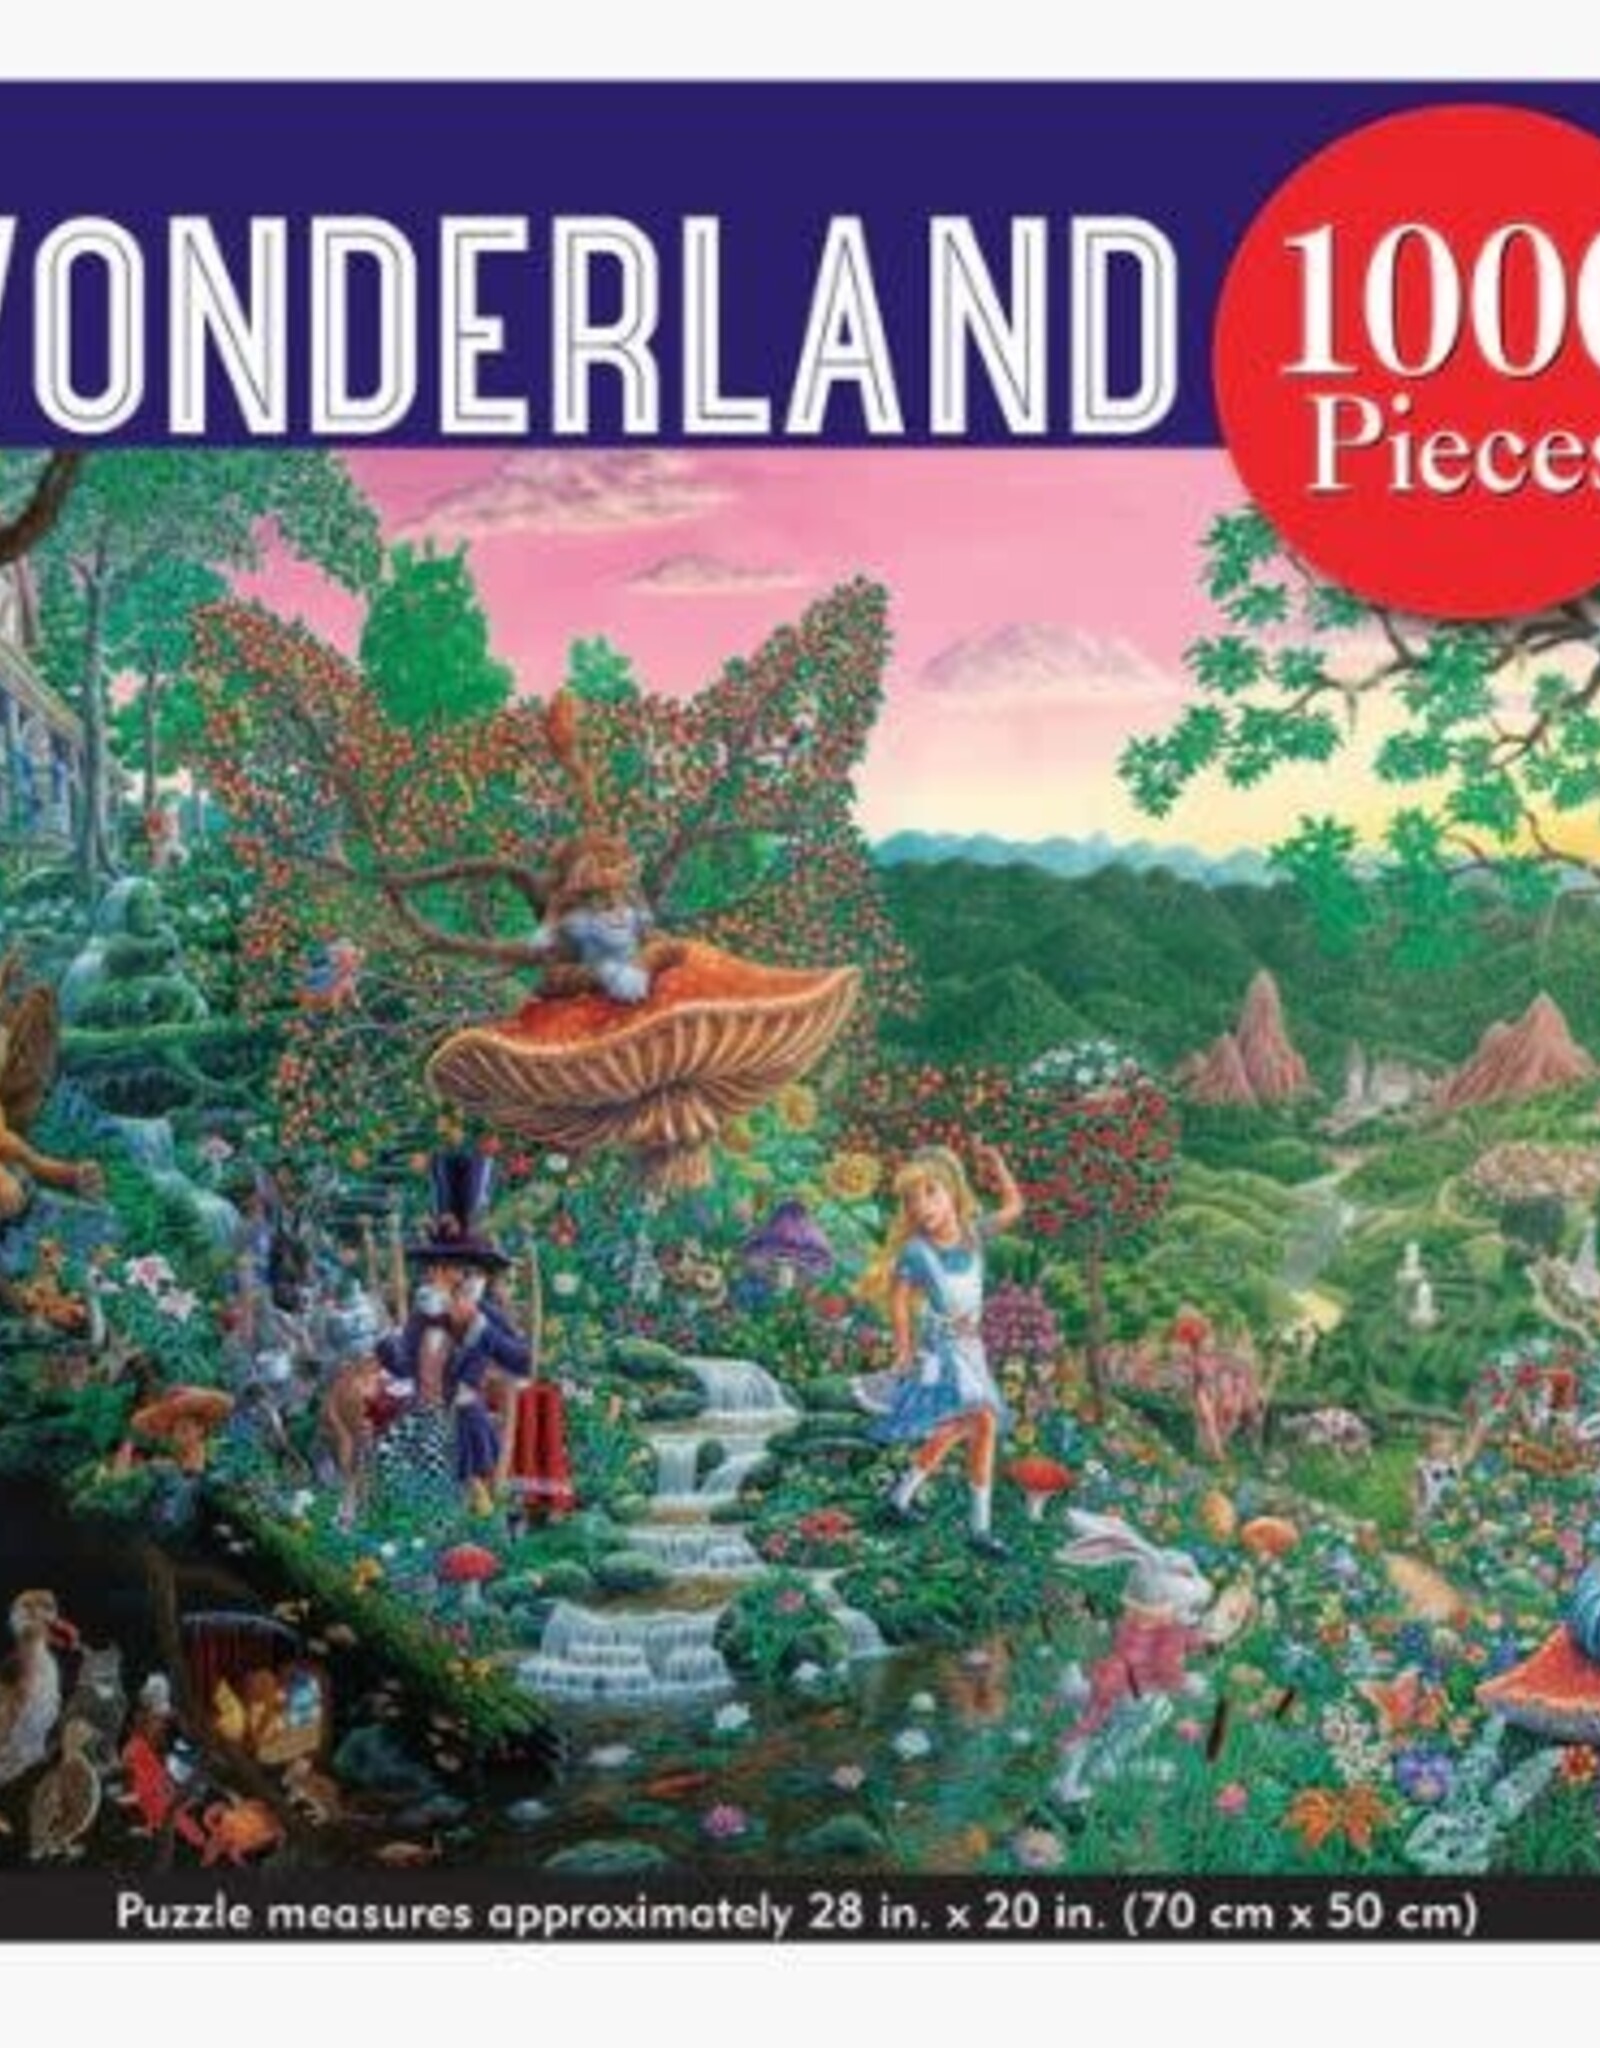 Peter Pauper Press Wonderland 1000 PC